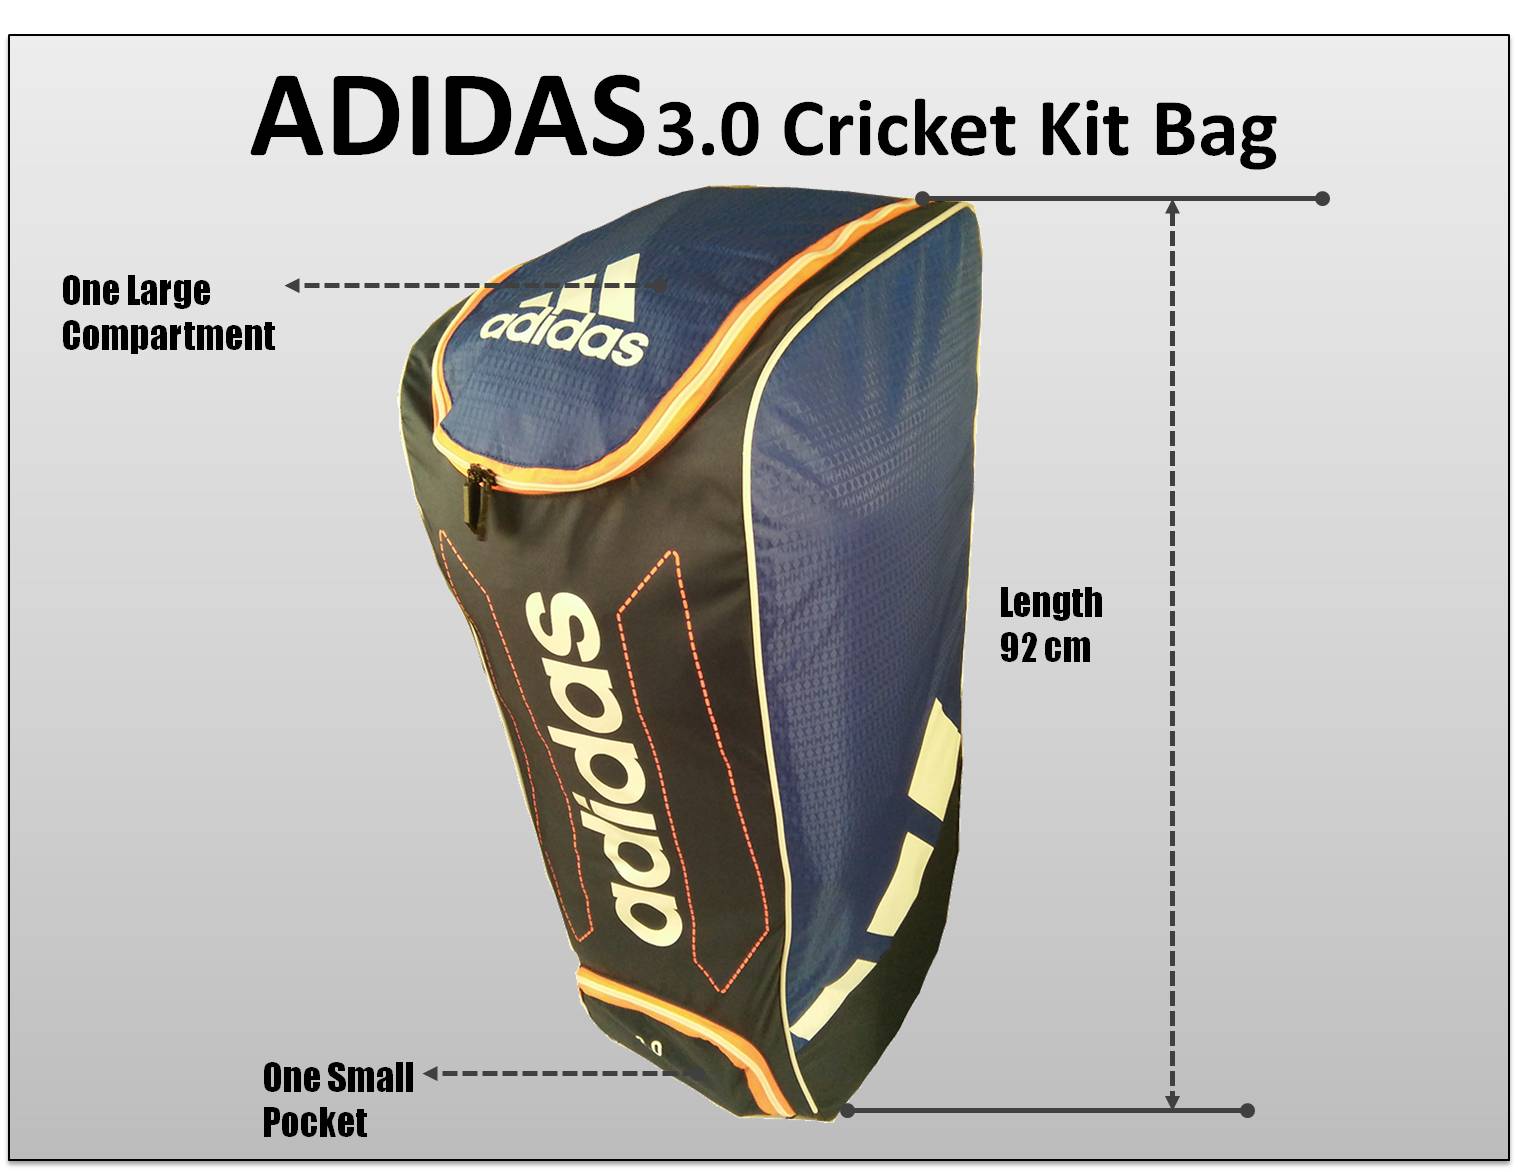 Adidas_3.0_Cricket_Kit_bag_Navy_blue_TECHNOLOGY_1.jpg